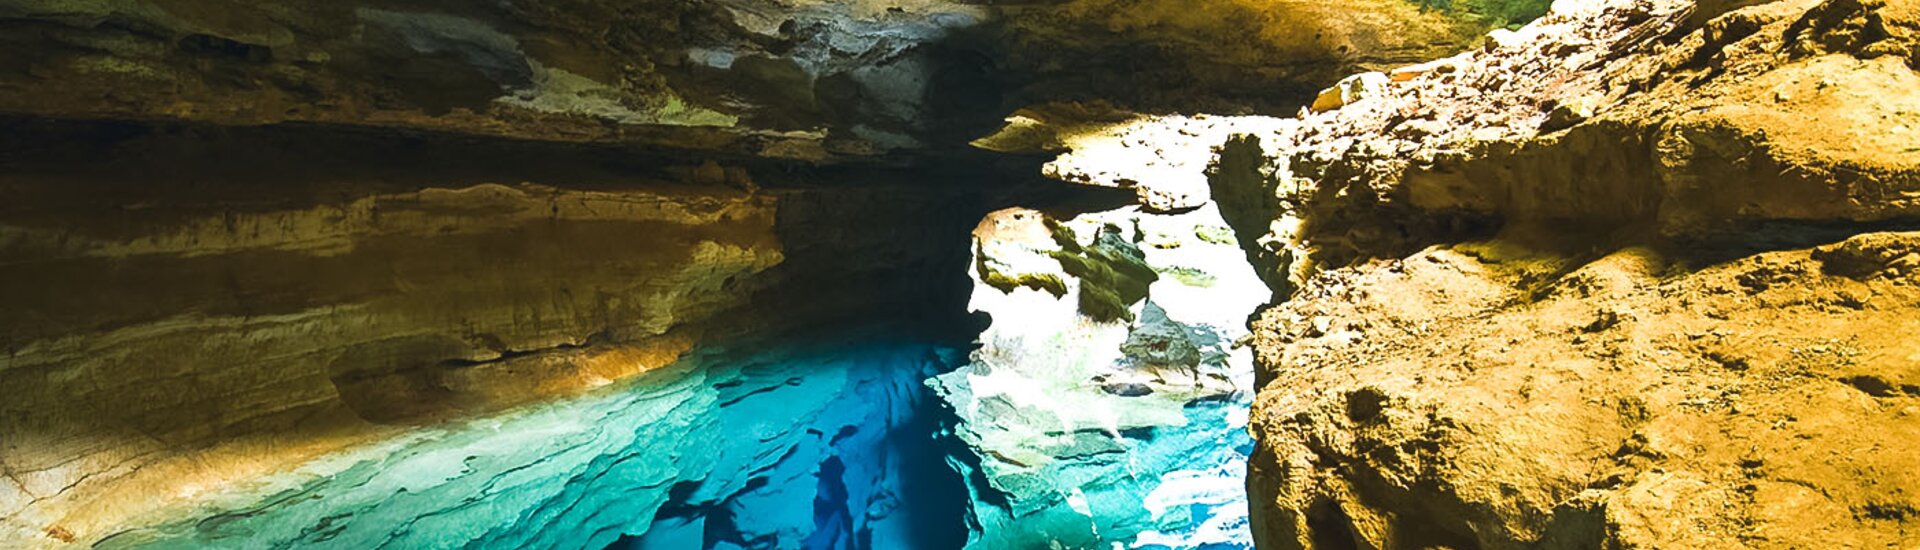 Höhle im Nationalpark Chapada Diamantina